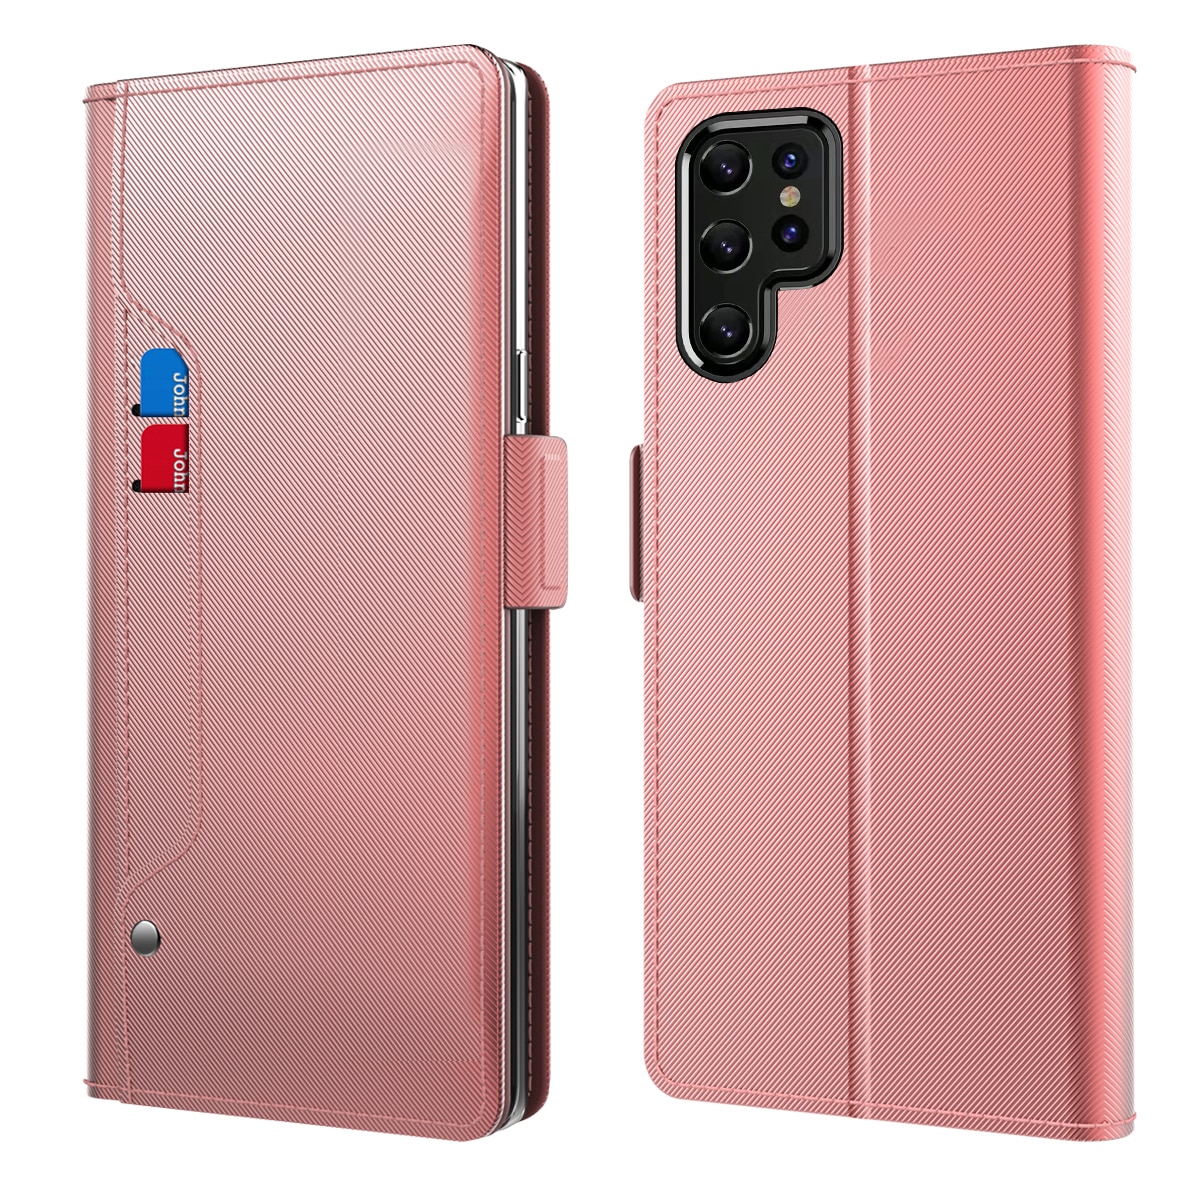 Samsung Galaxy S22 Ultra Wallet Case Mirror Pink Gold